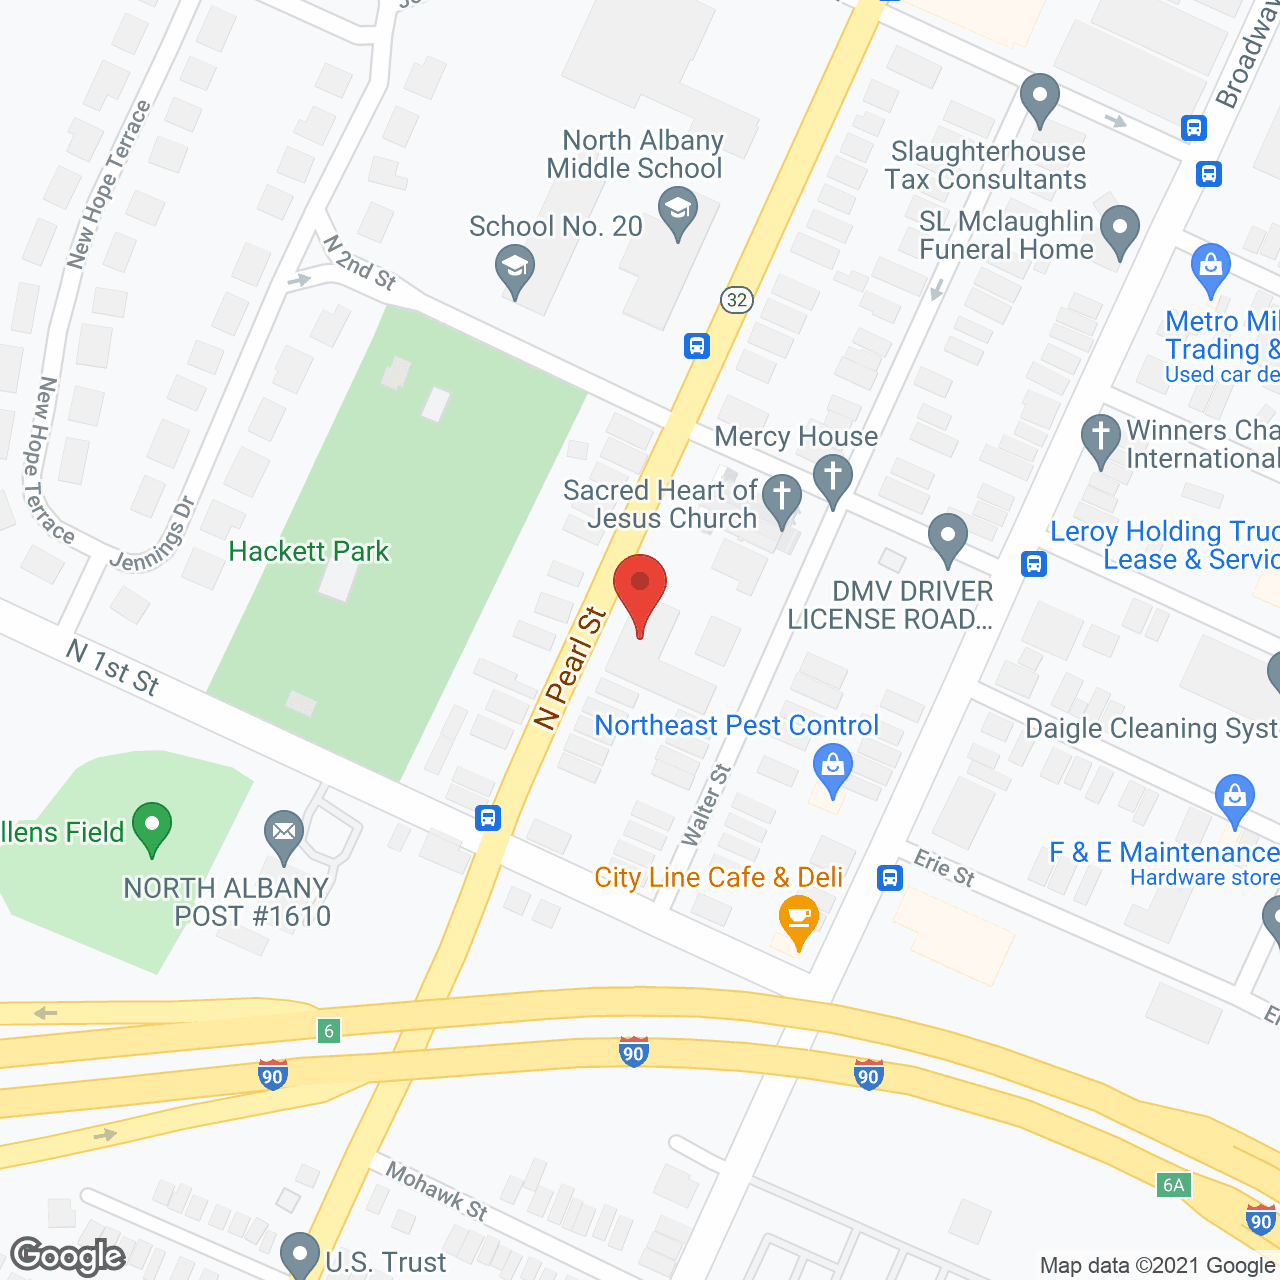 Homestead in google map